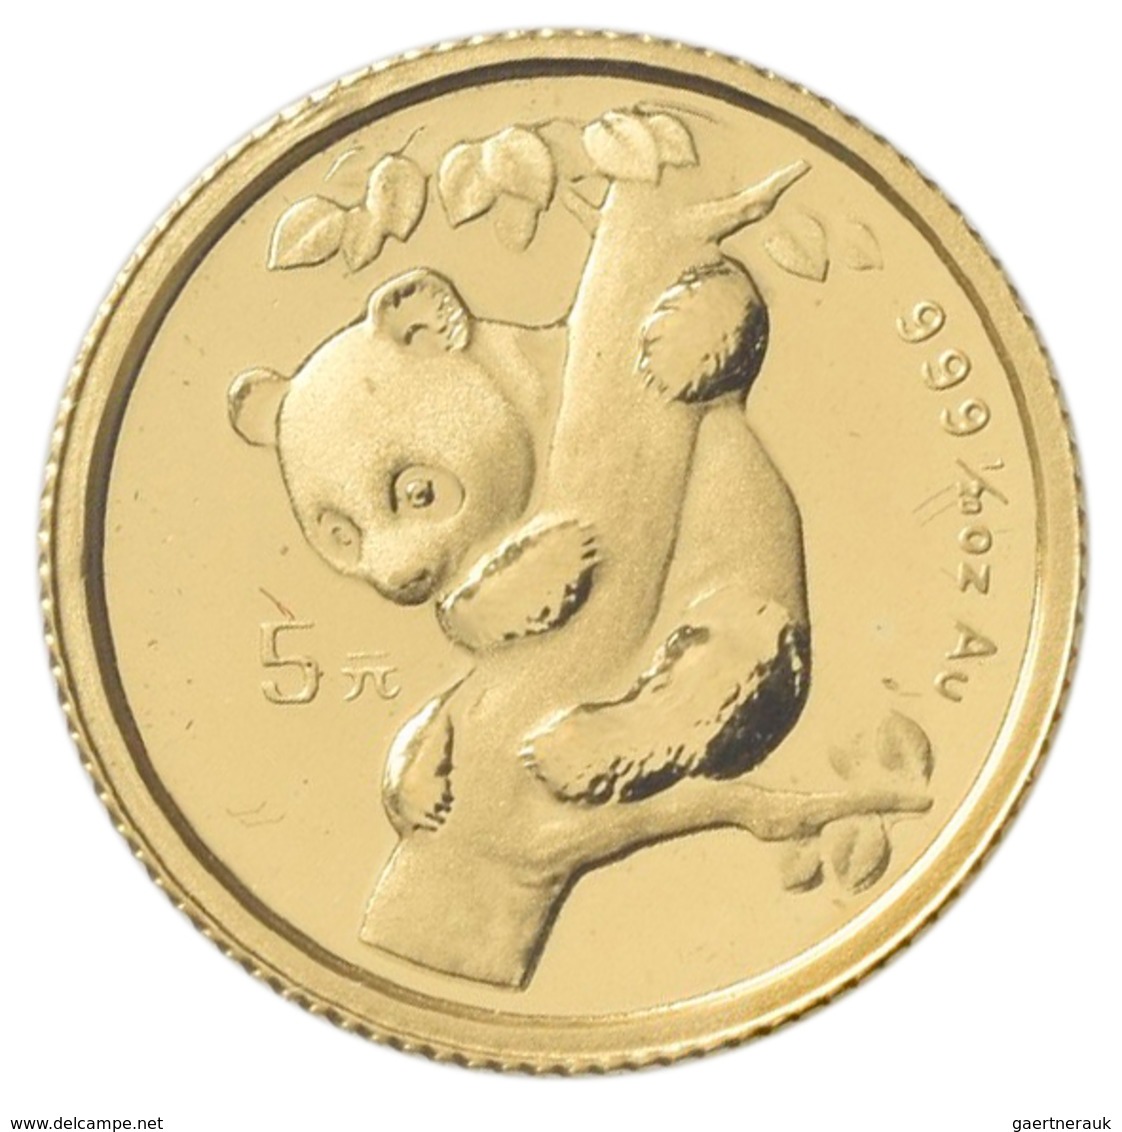 China - Volksrepublik - Anlagegold: 5 Yuan 1996, Goldpanda, KM# 883, Friedberg B8. 1,56 G (1/20 OZ), - China